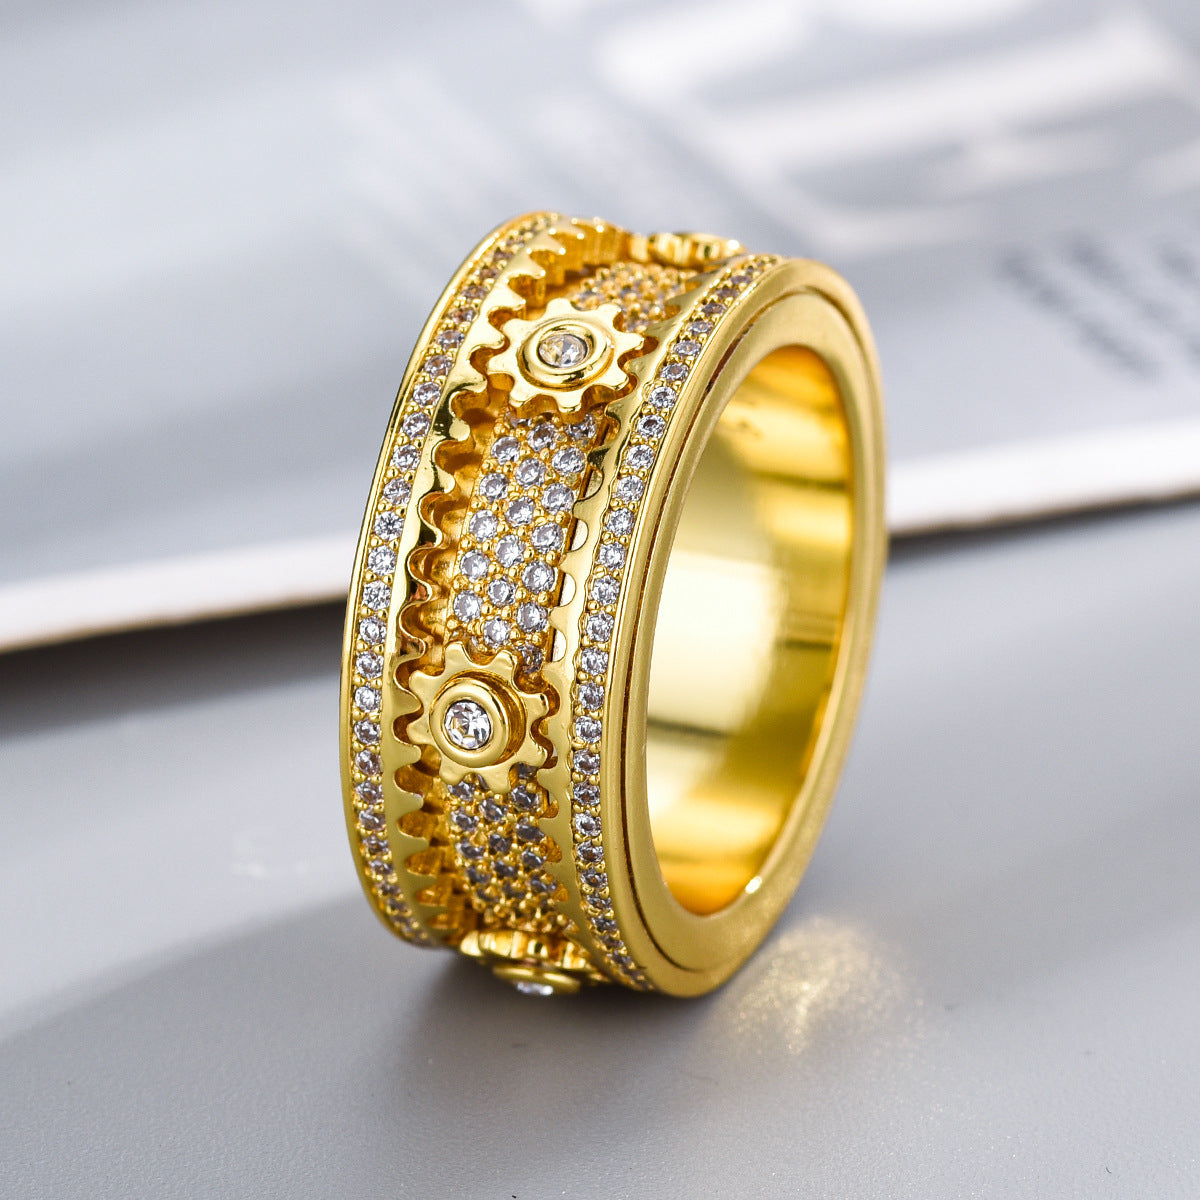 Spinning Gear Diamond Ring in Solid 18k Gold - CIVIBUY